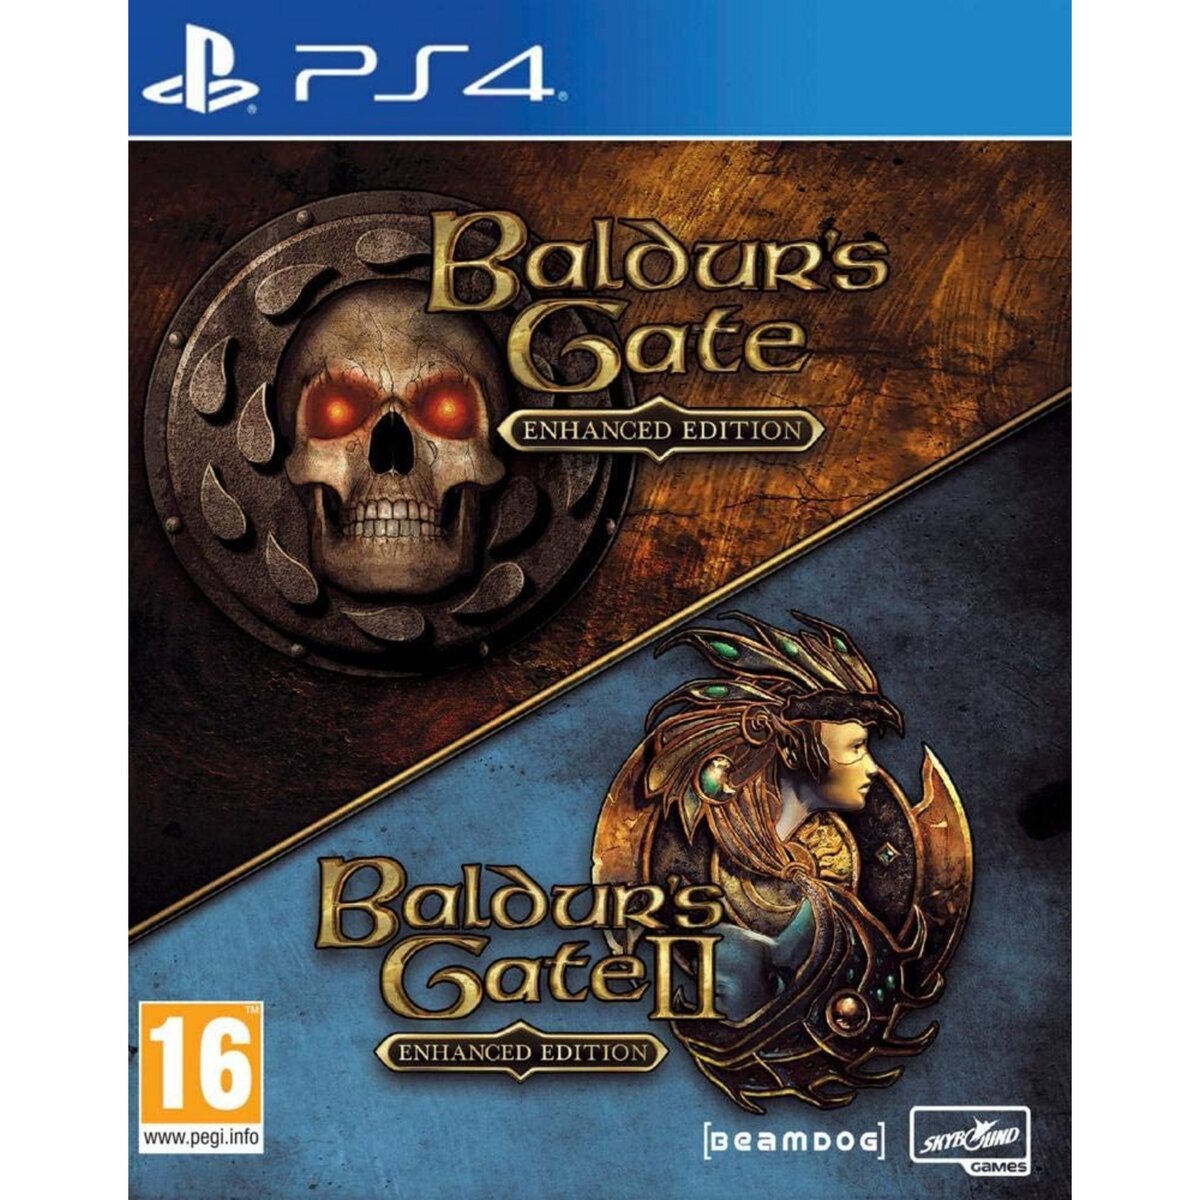 The Baldurs Gate Enhanced Edition PS4